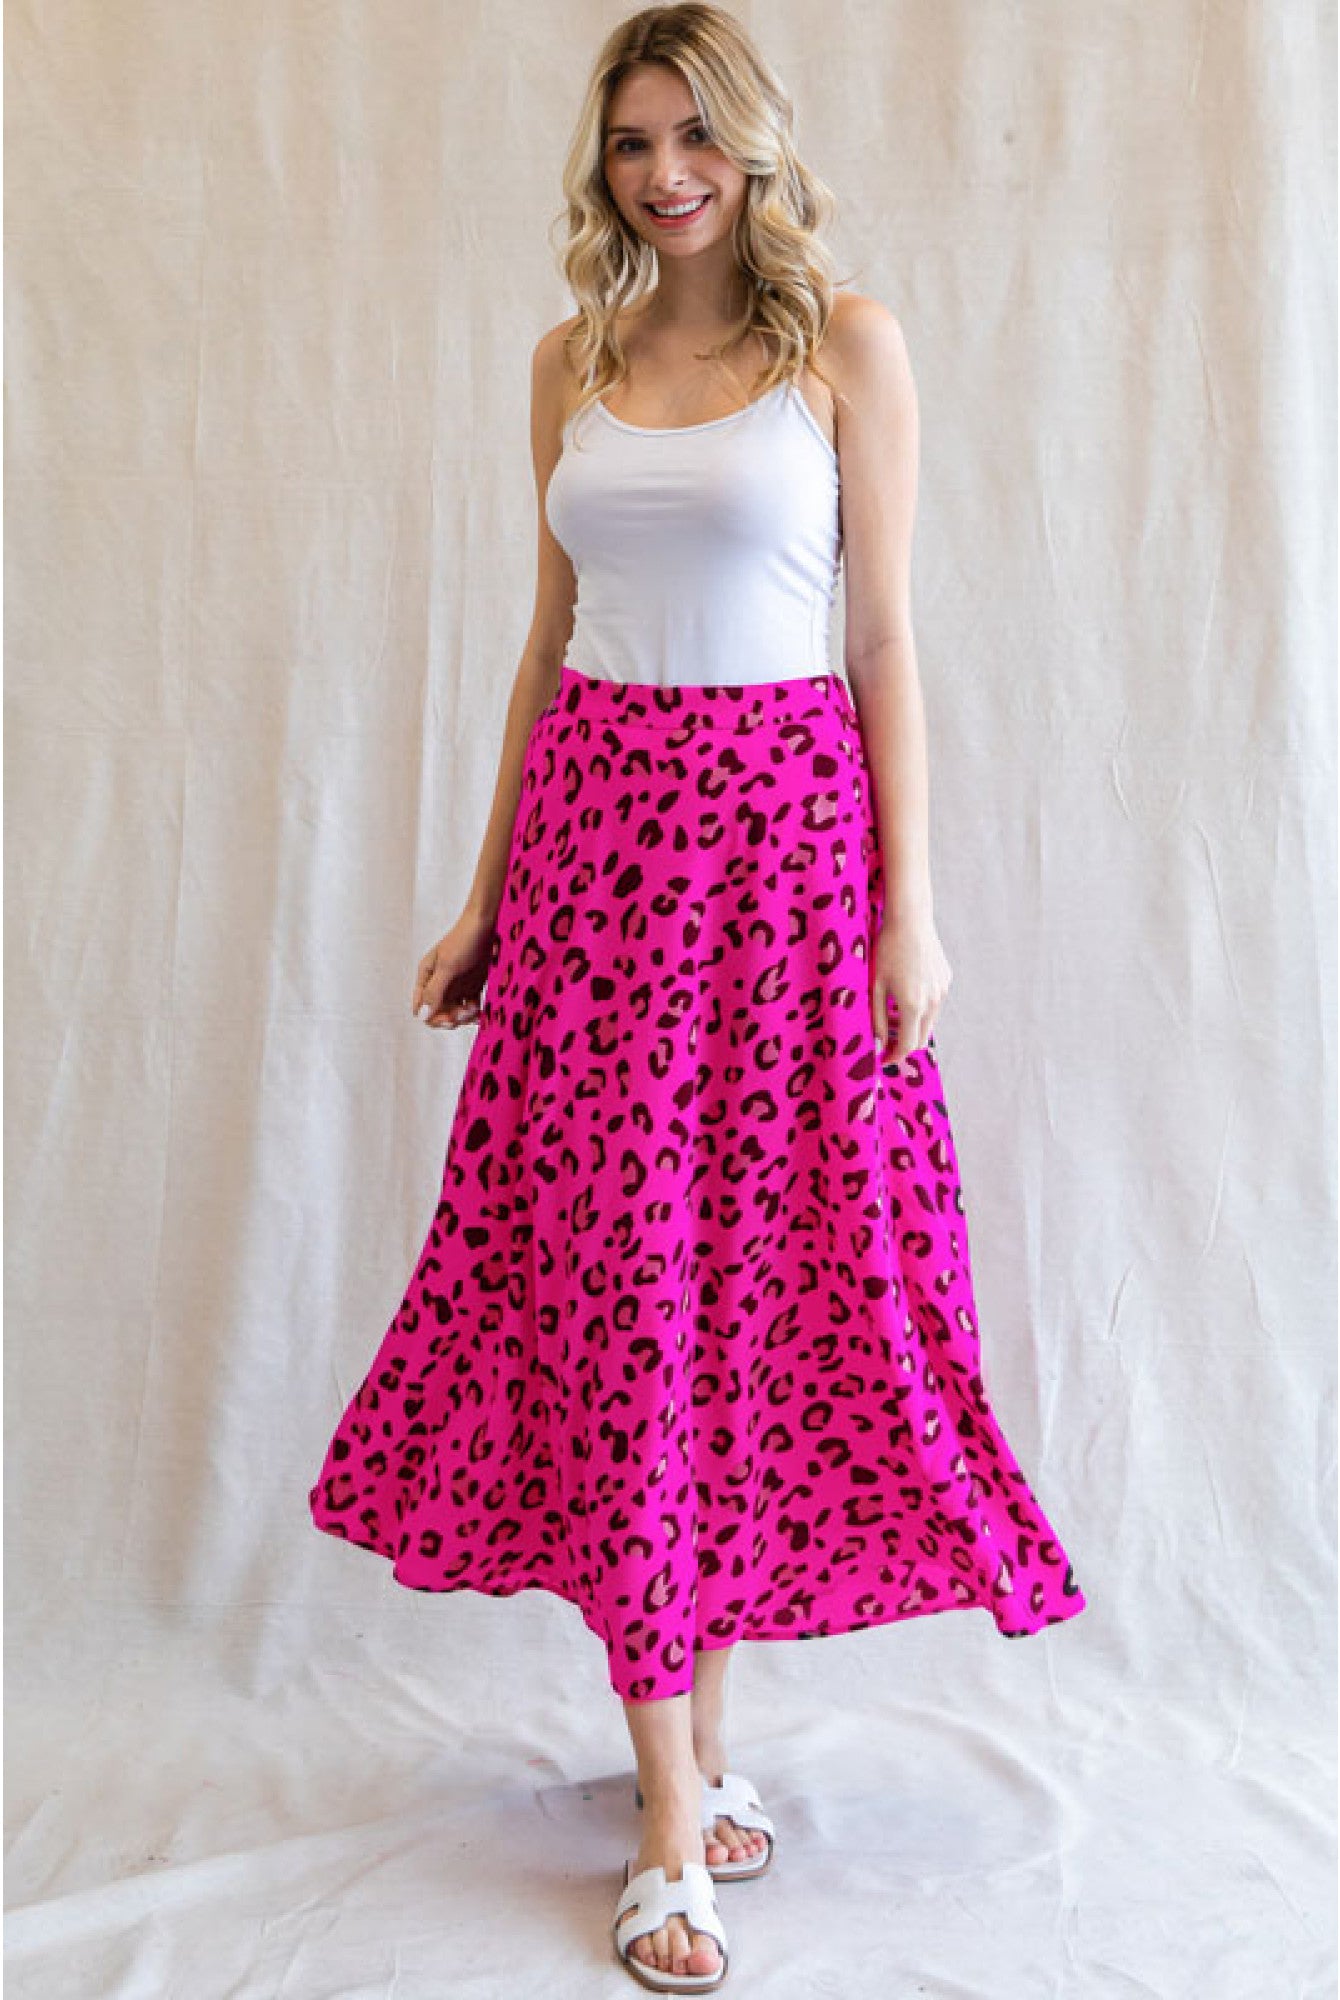 Lauren Pink Leopard Circle Skirt-Skirts-Deadwood South Boutique & Company-Deadwood South Boutique, Women's Fashion Boutique in Henderson, TX